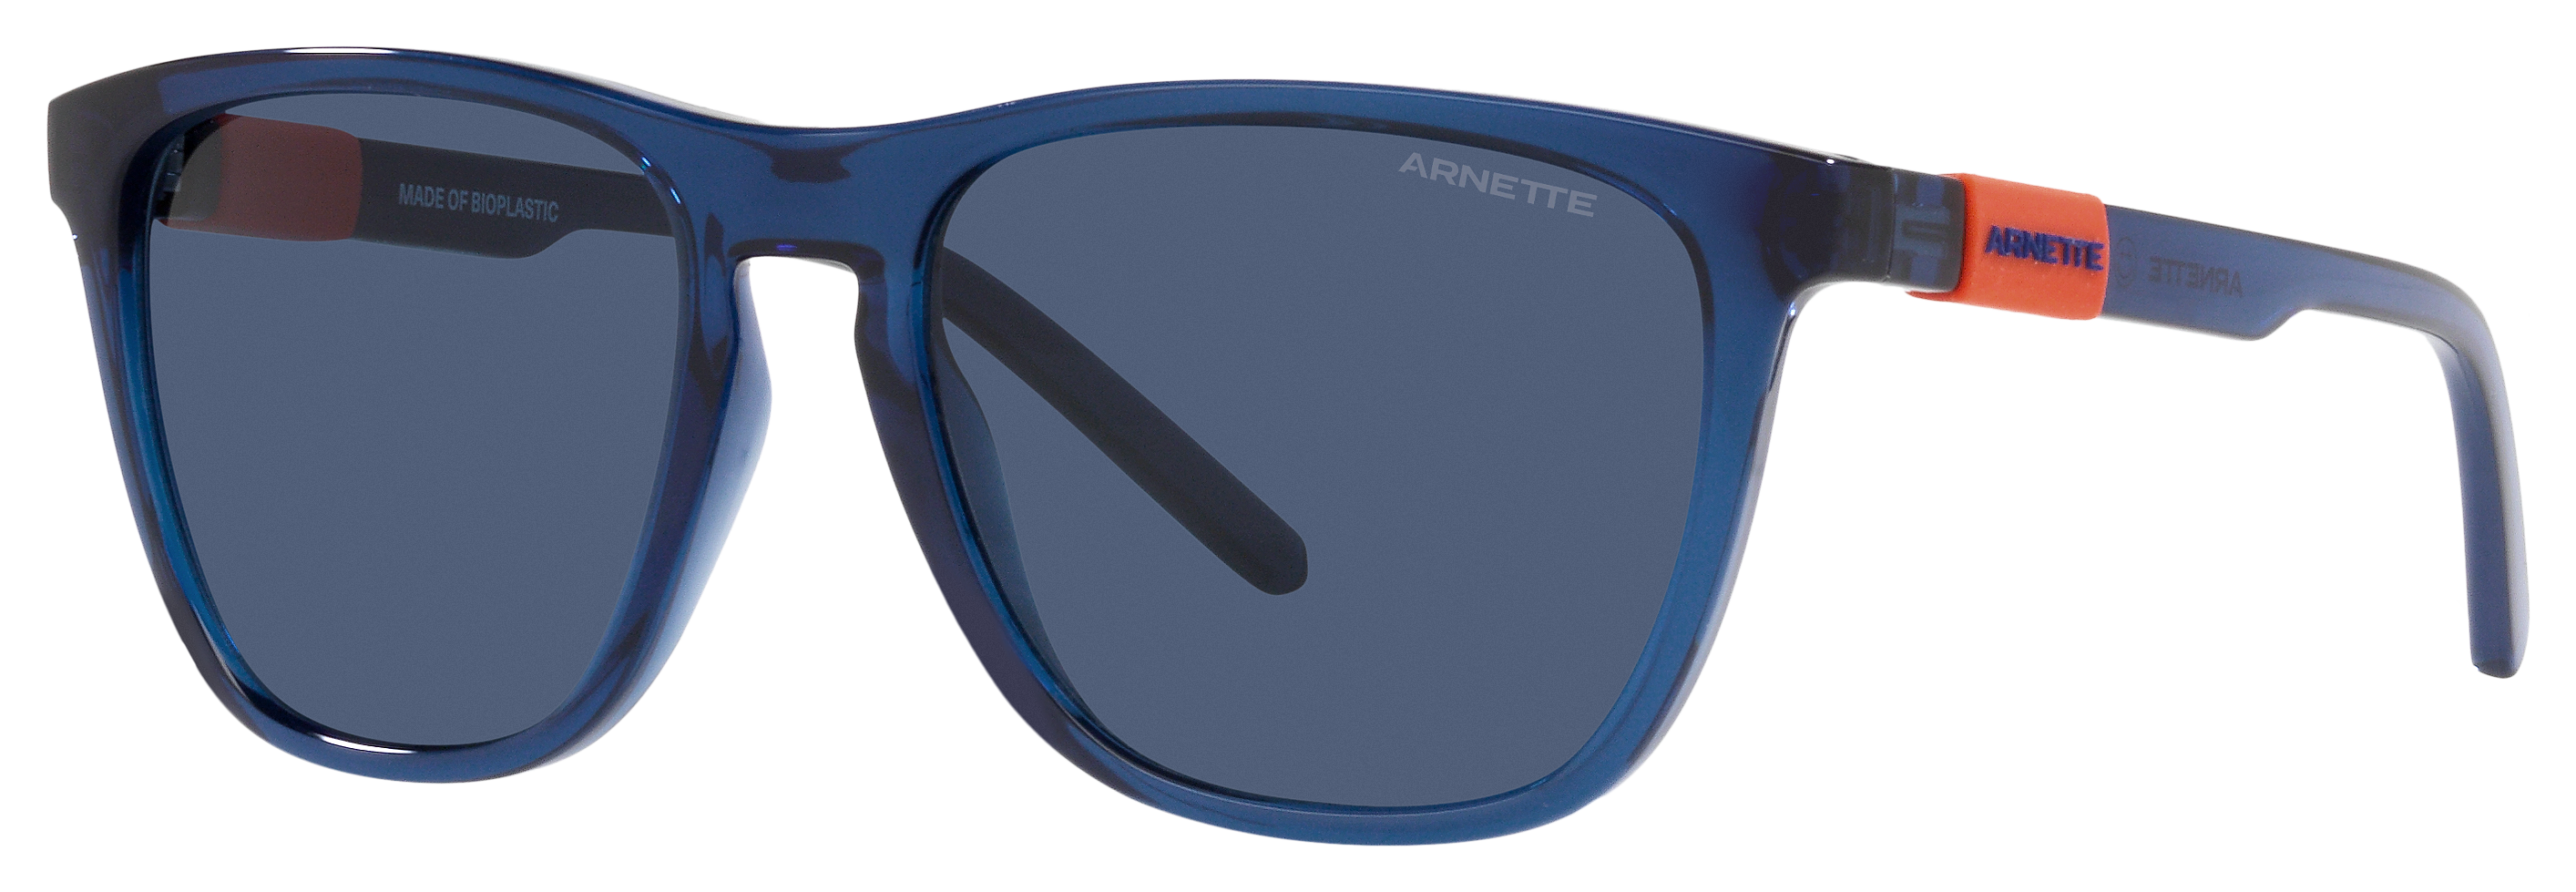 Arnette Monkey AN4310 Sunglasses for Kids - Transparent Blue Cobalt/Dark Blue - Large